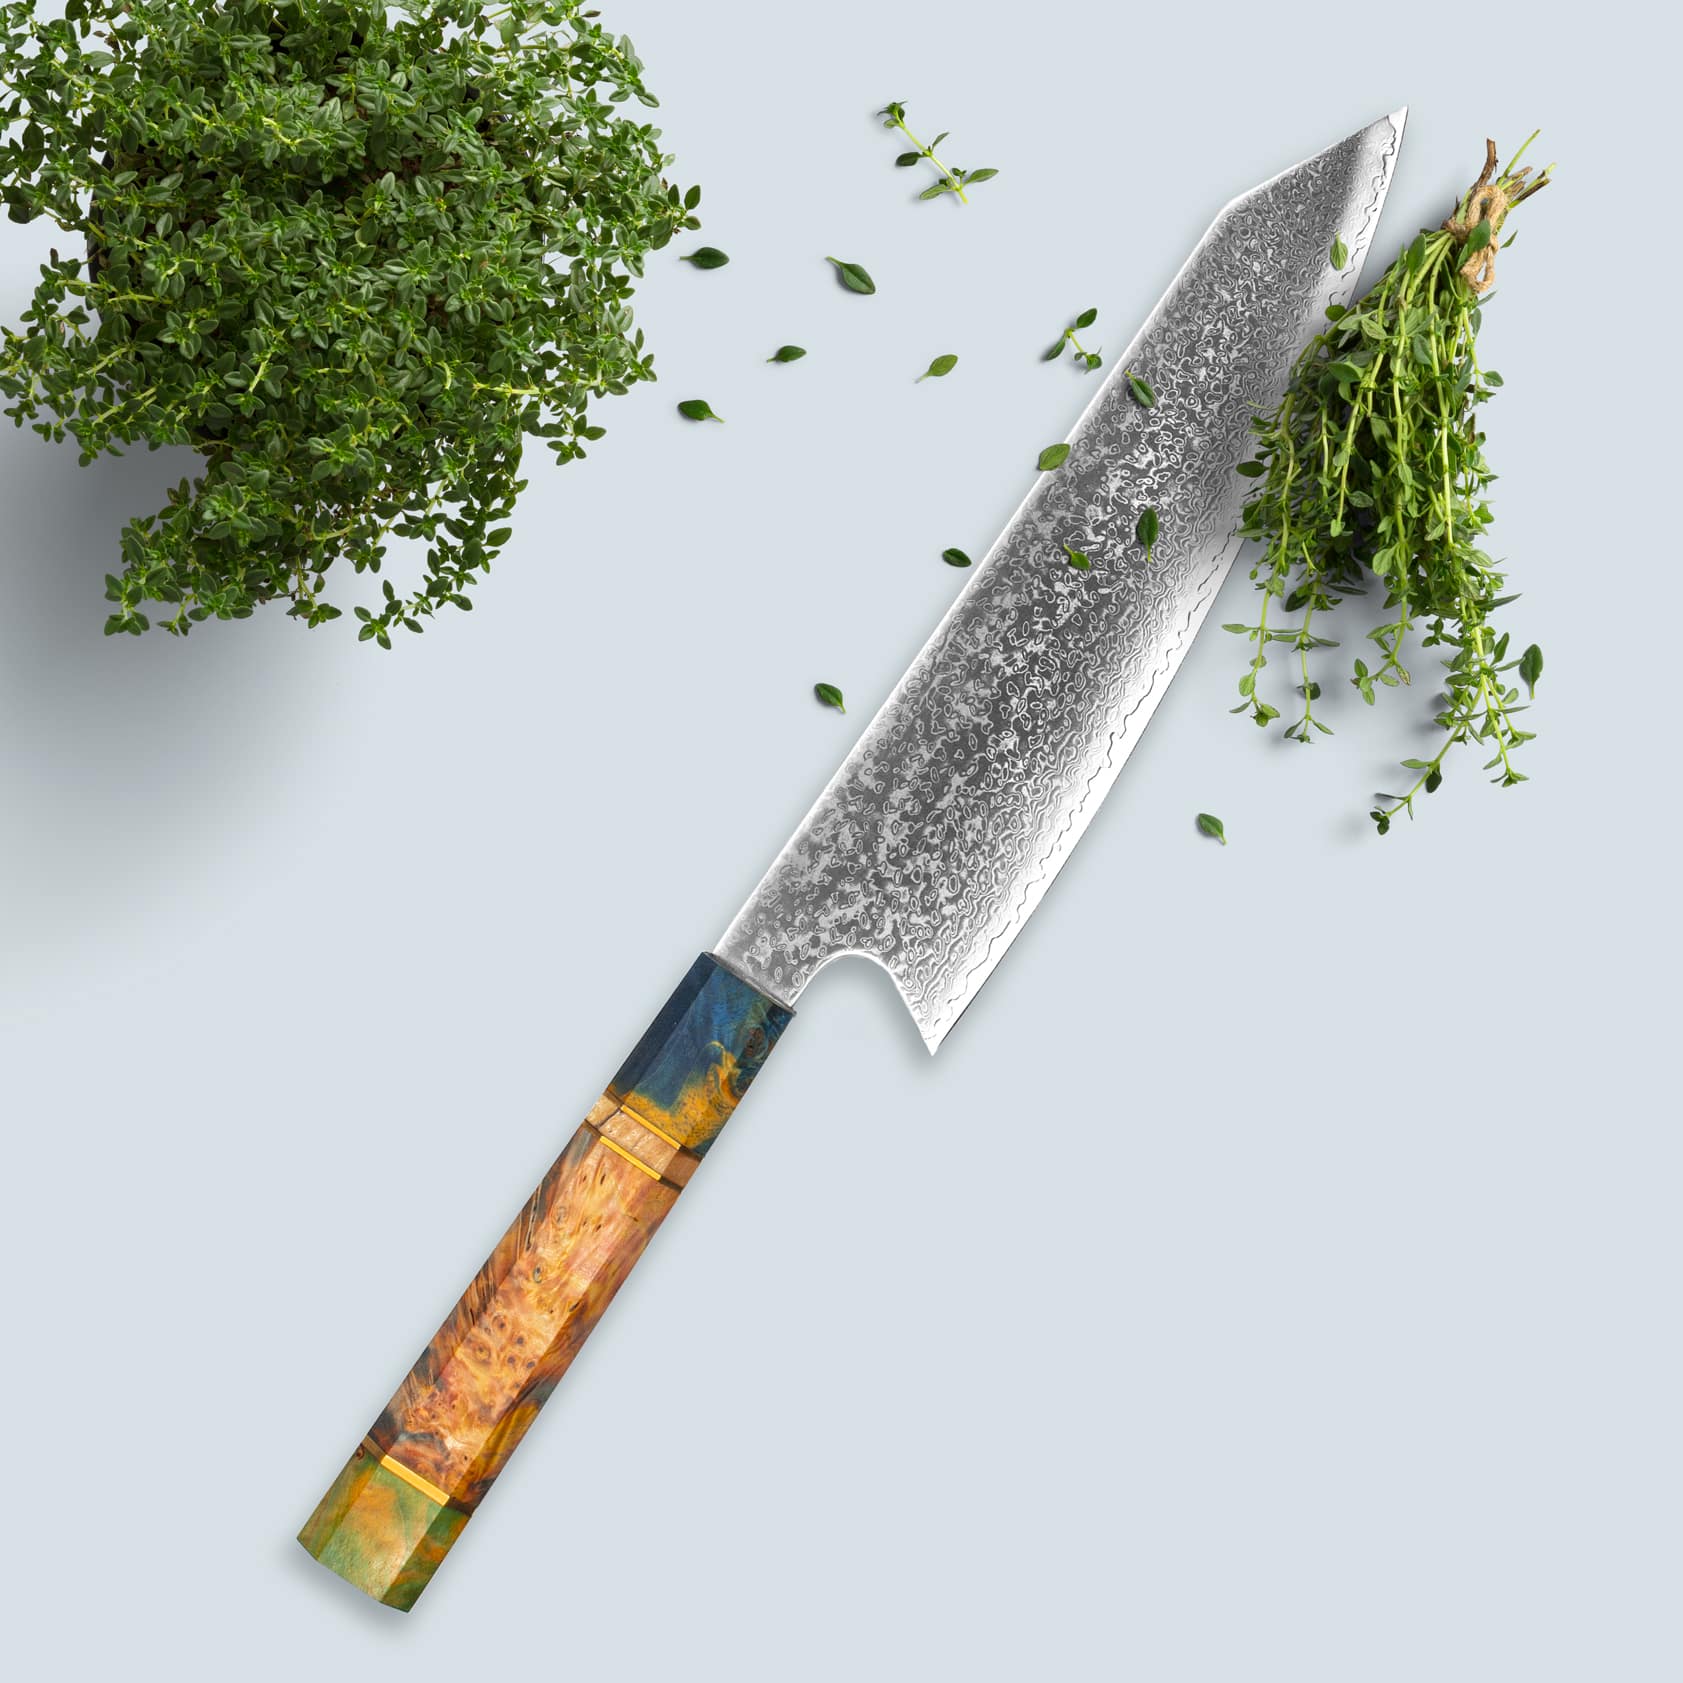 ICHIKA (いち か か) Damasco Knife in acciaio con manico ottagonale colorato